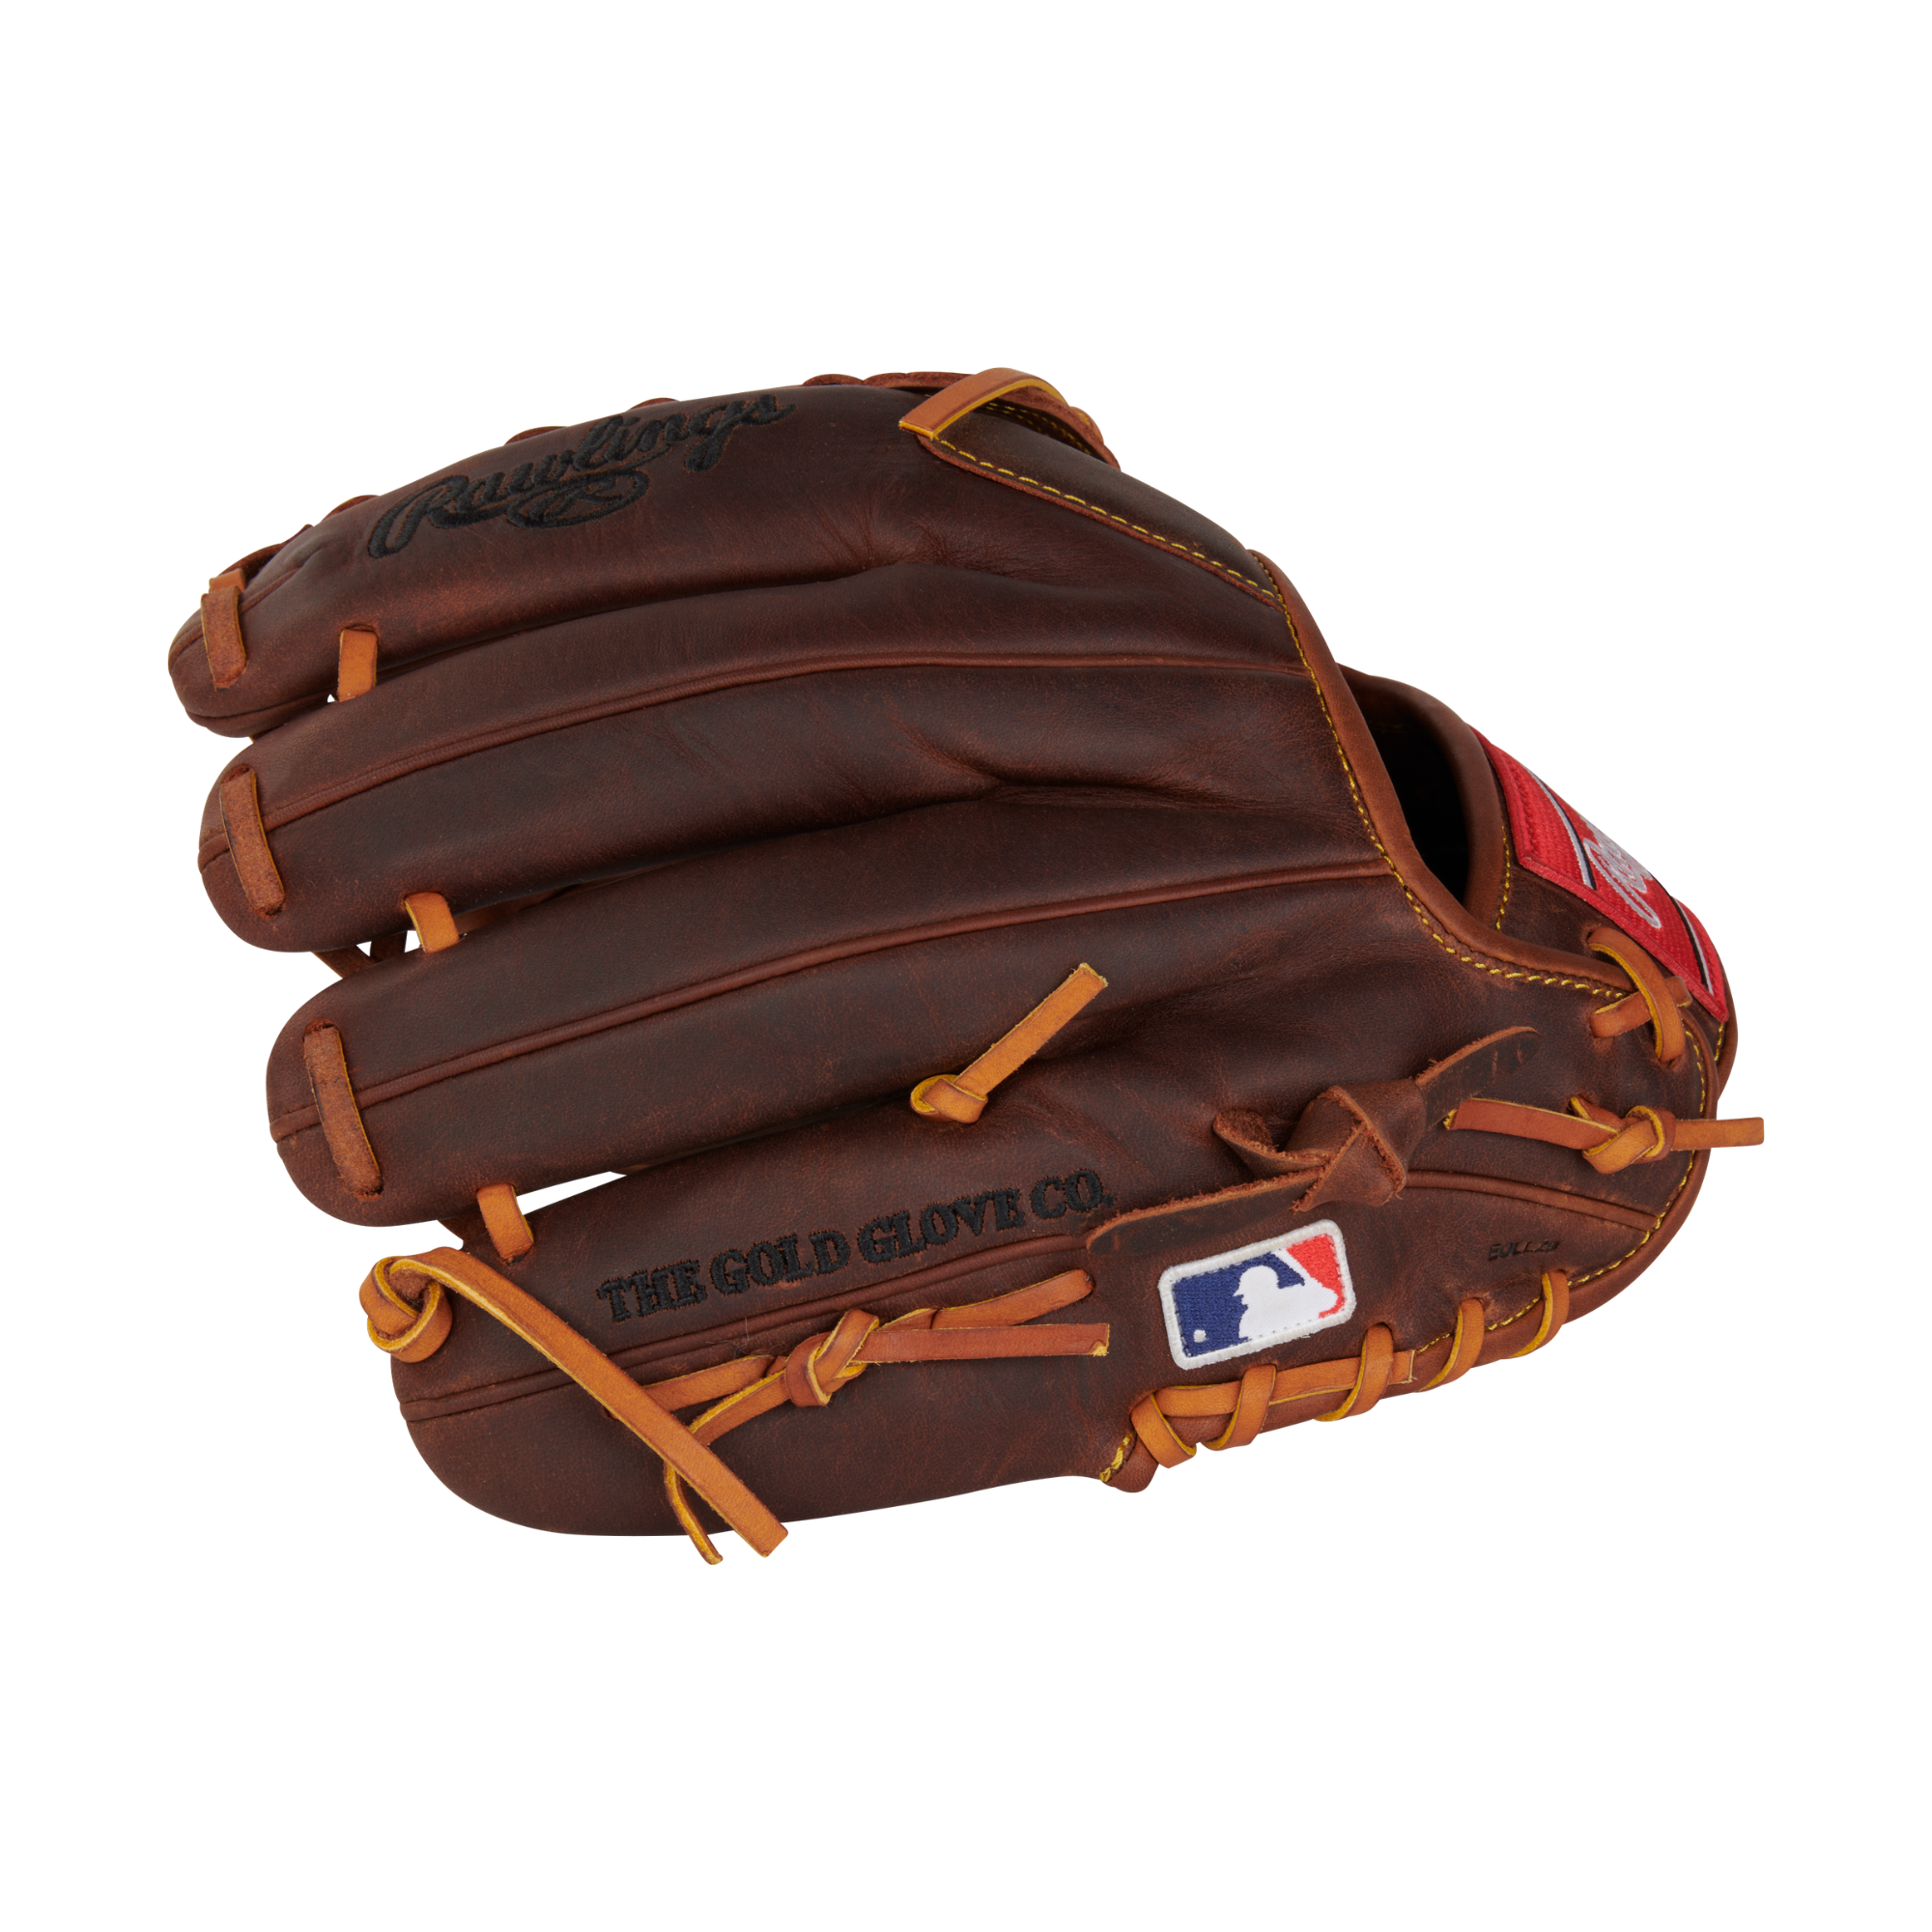 Rawlings Heart Of The Hide Series Baseball Glove 12" RHT